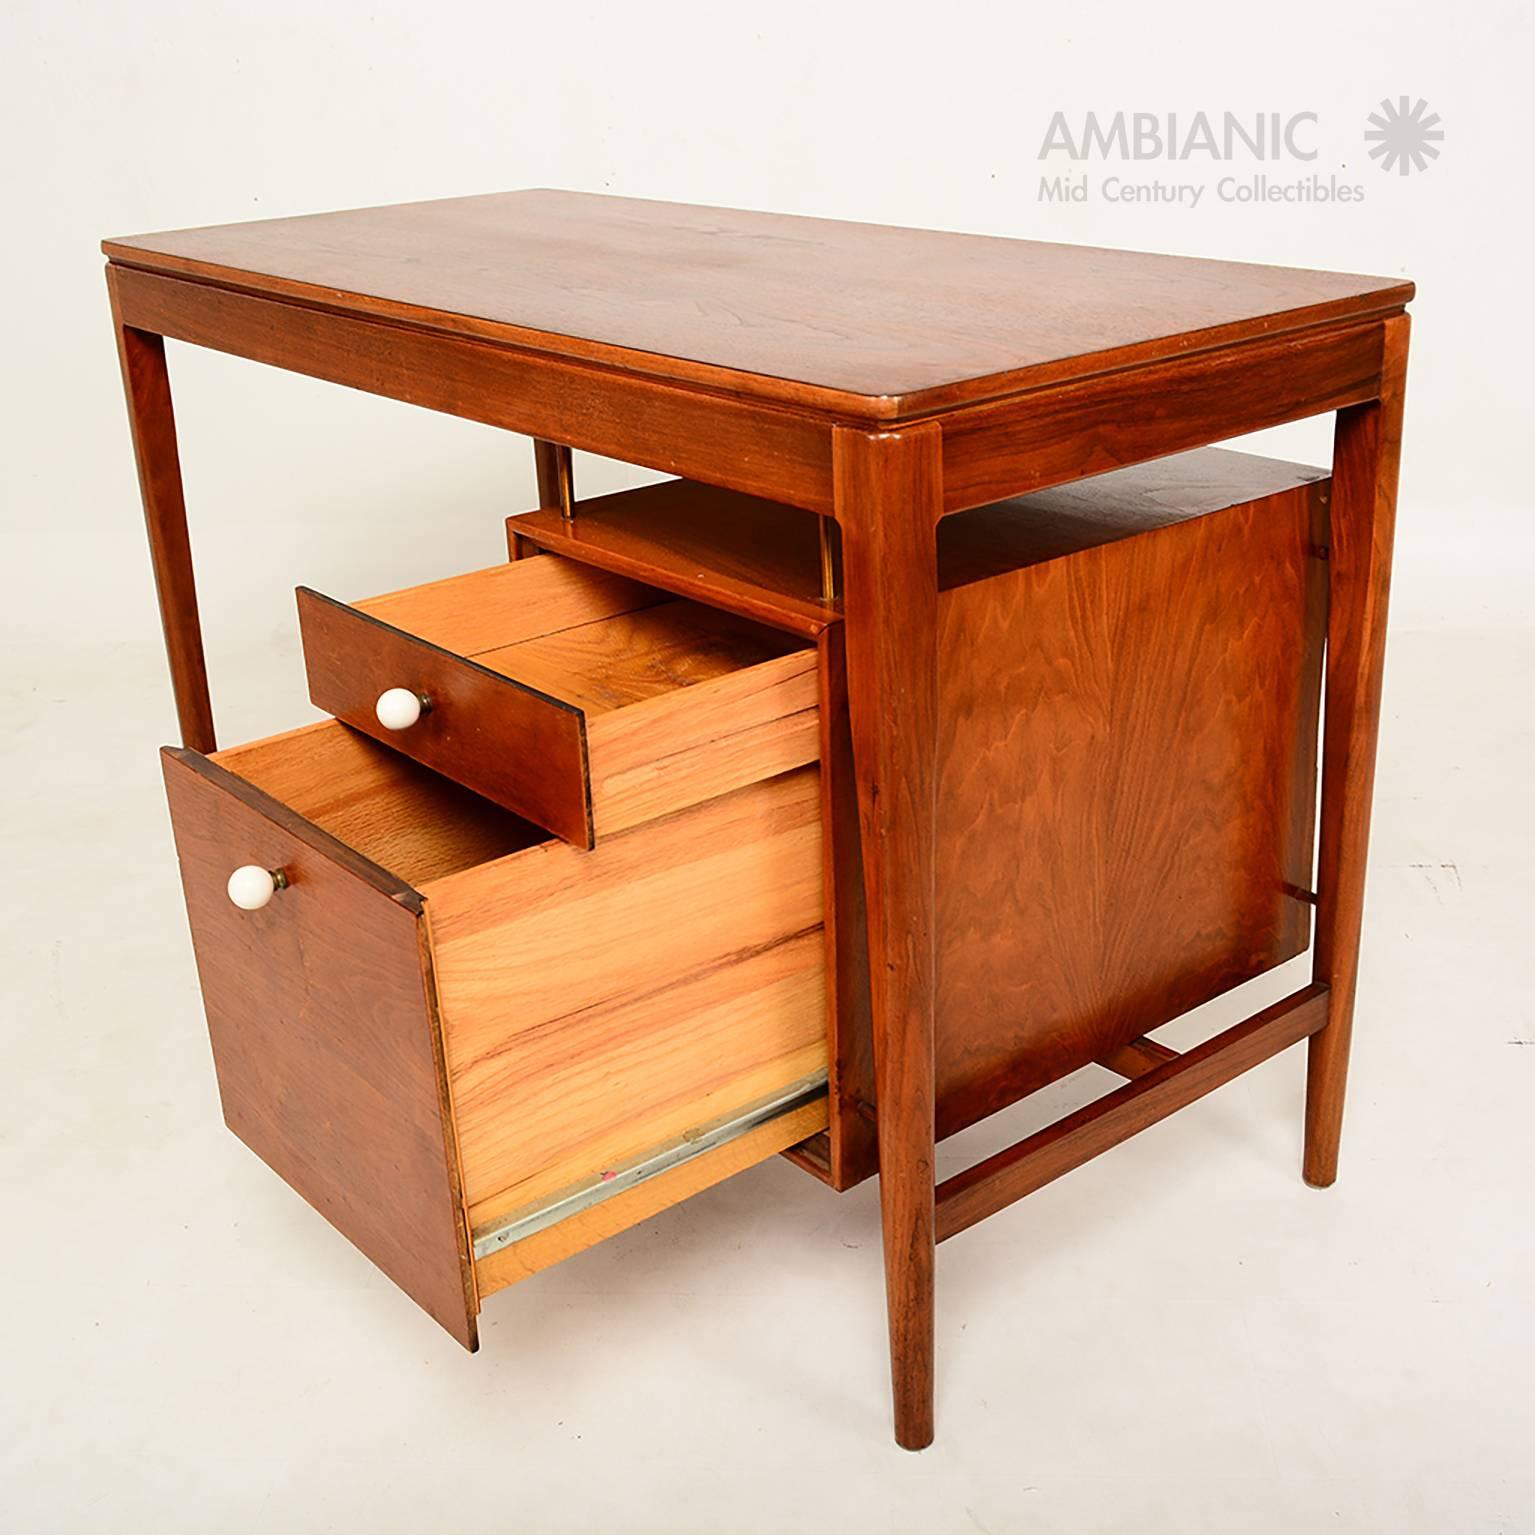 Mid-20th Century Midcentury Walnut Desk by Drexel